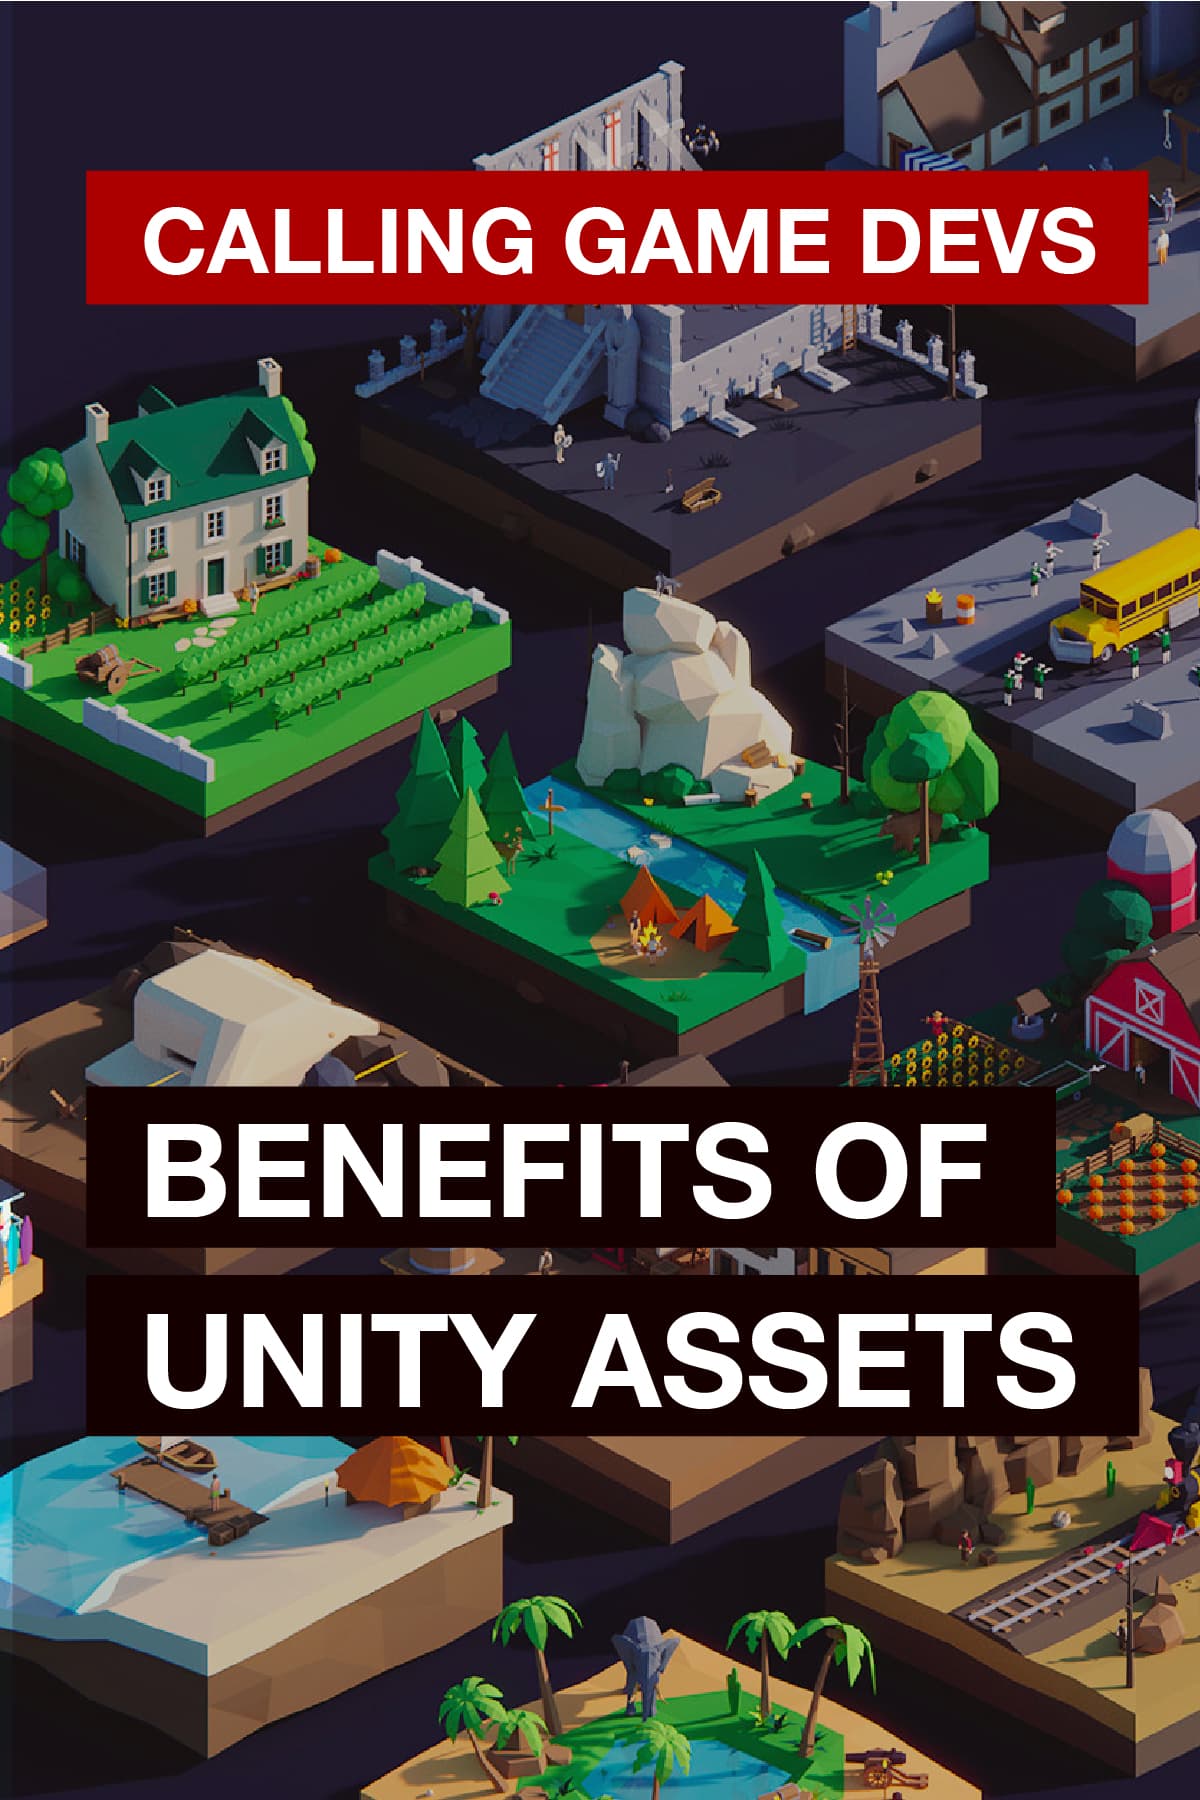 Unity Assets